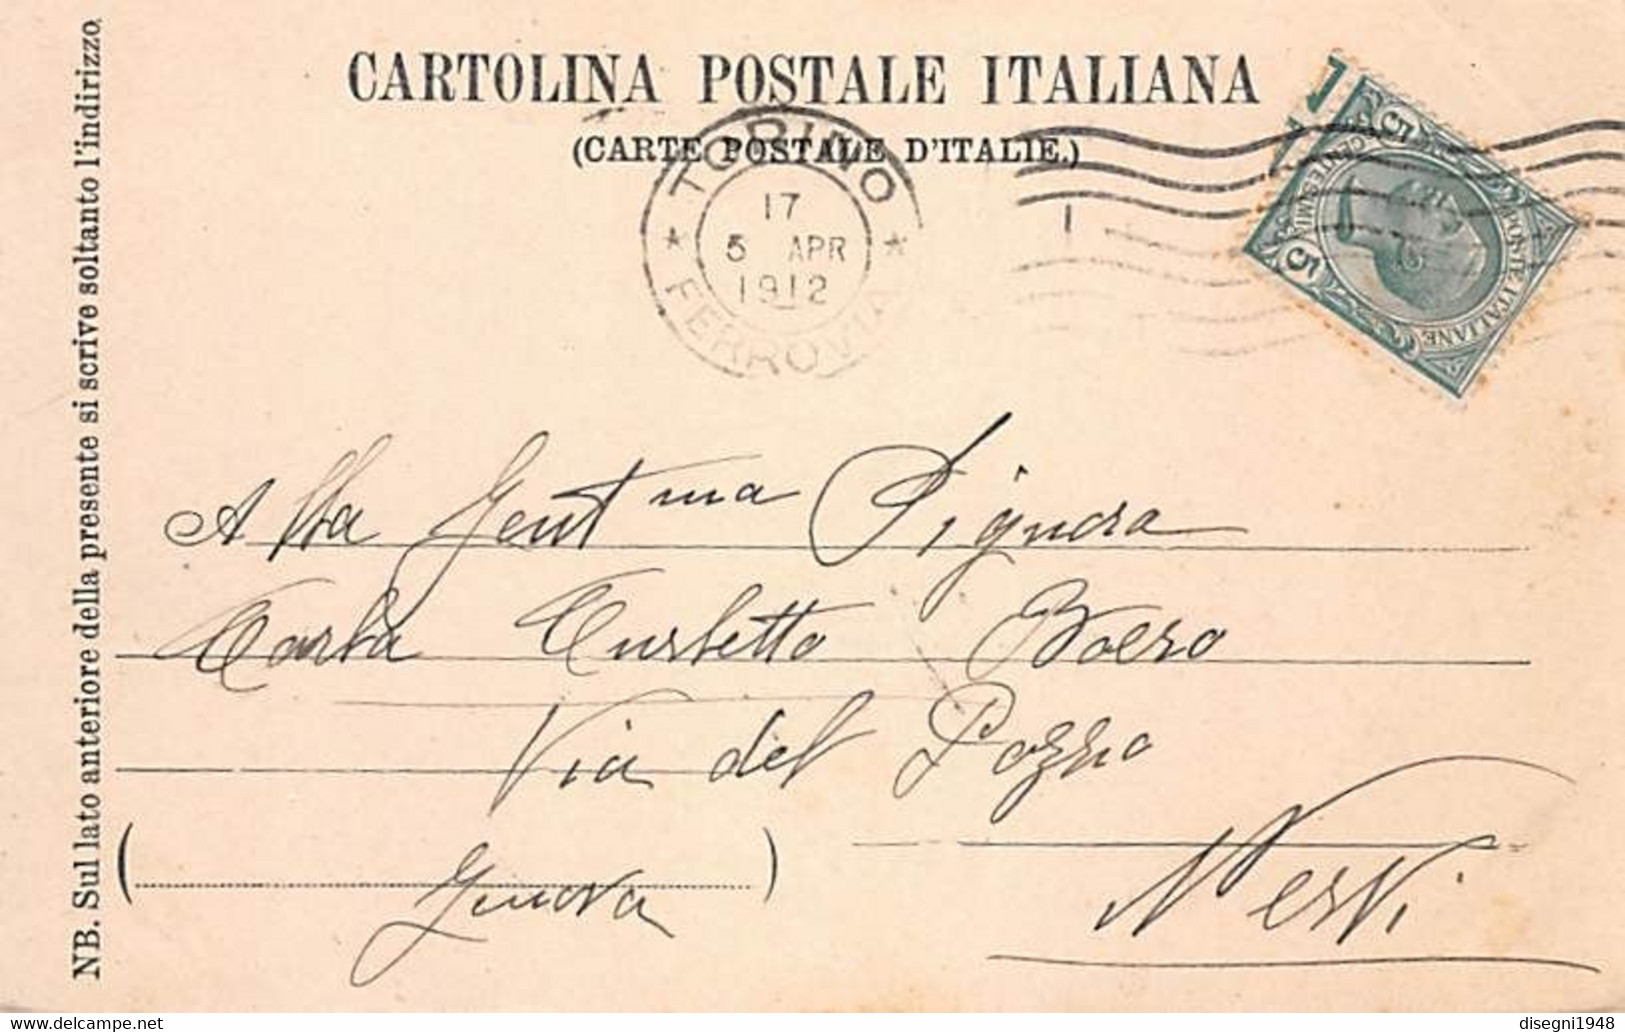 011703 "TORINO - GIARDINO DEL PALAZZO REALE" CART. ORIG. SPED. 1912 - Parks & Gardens